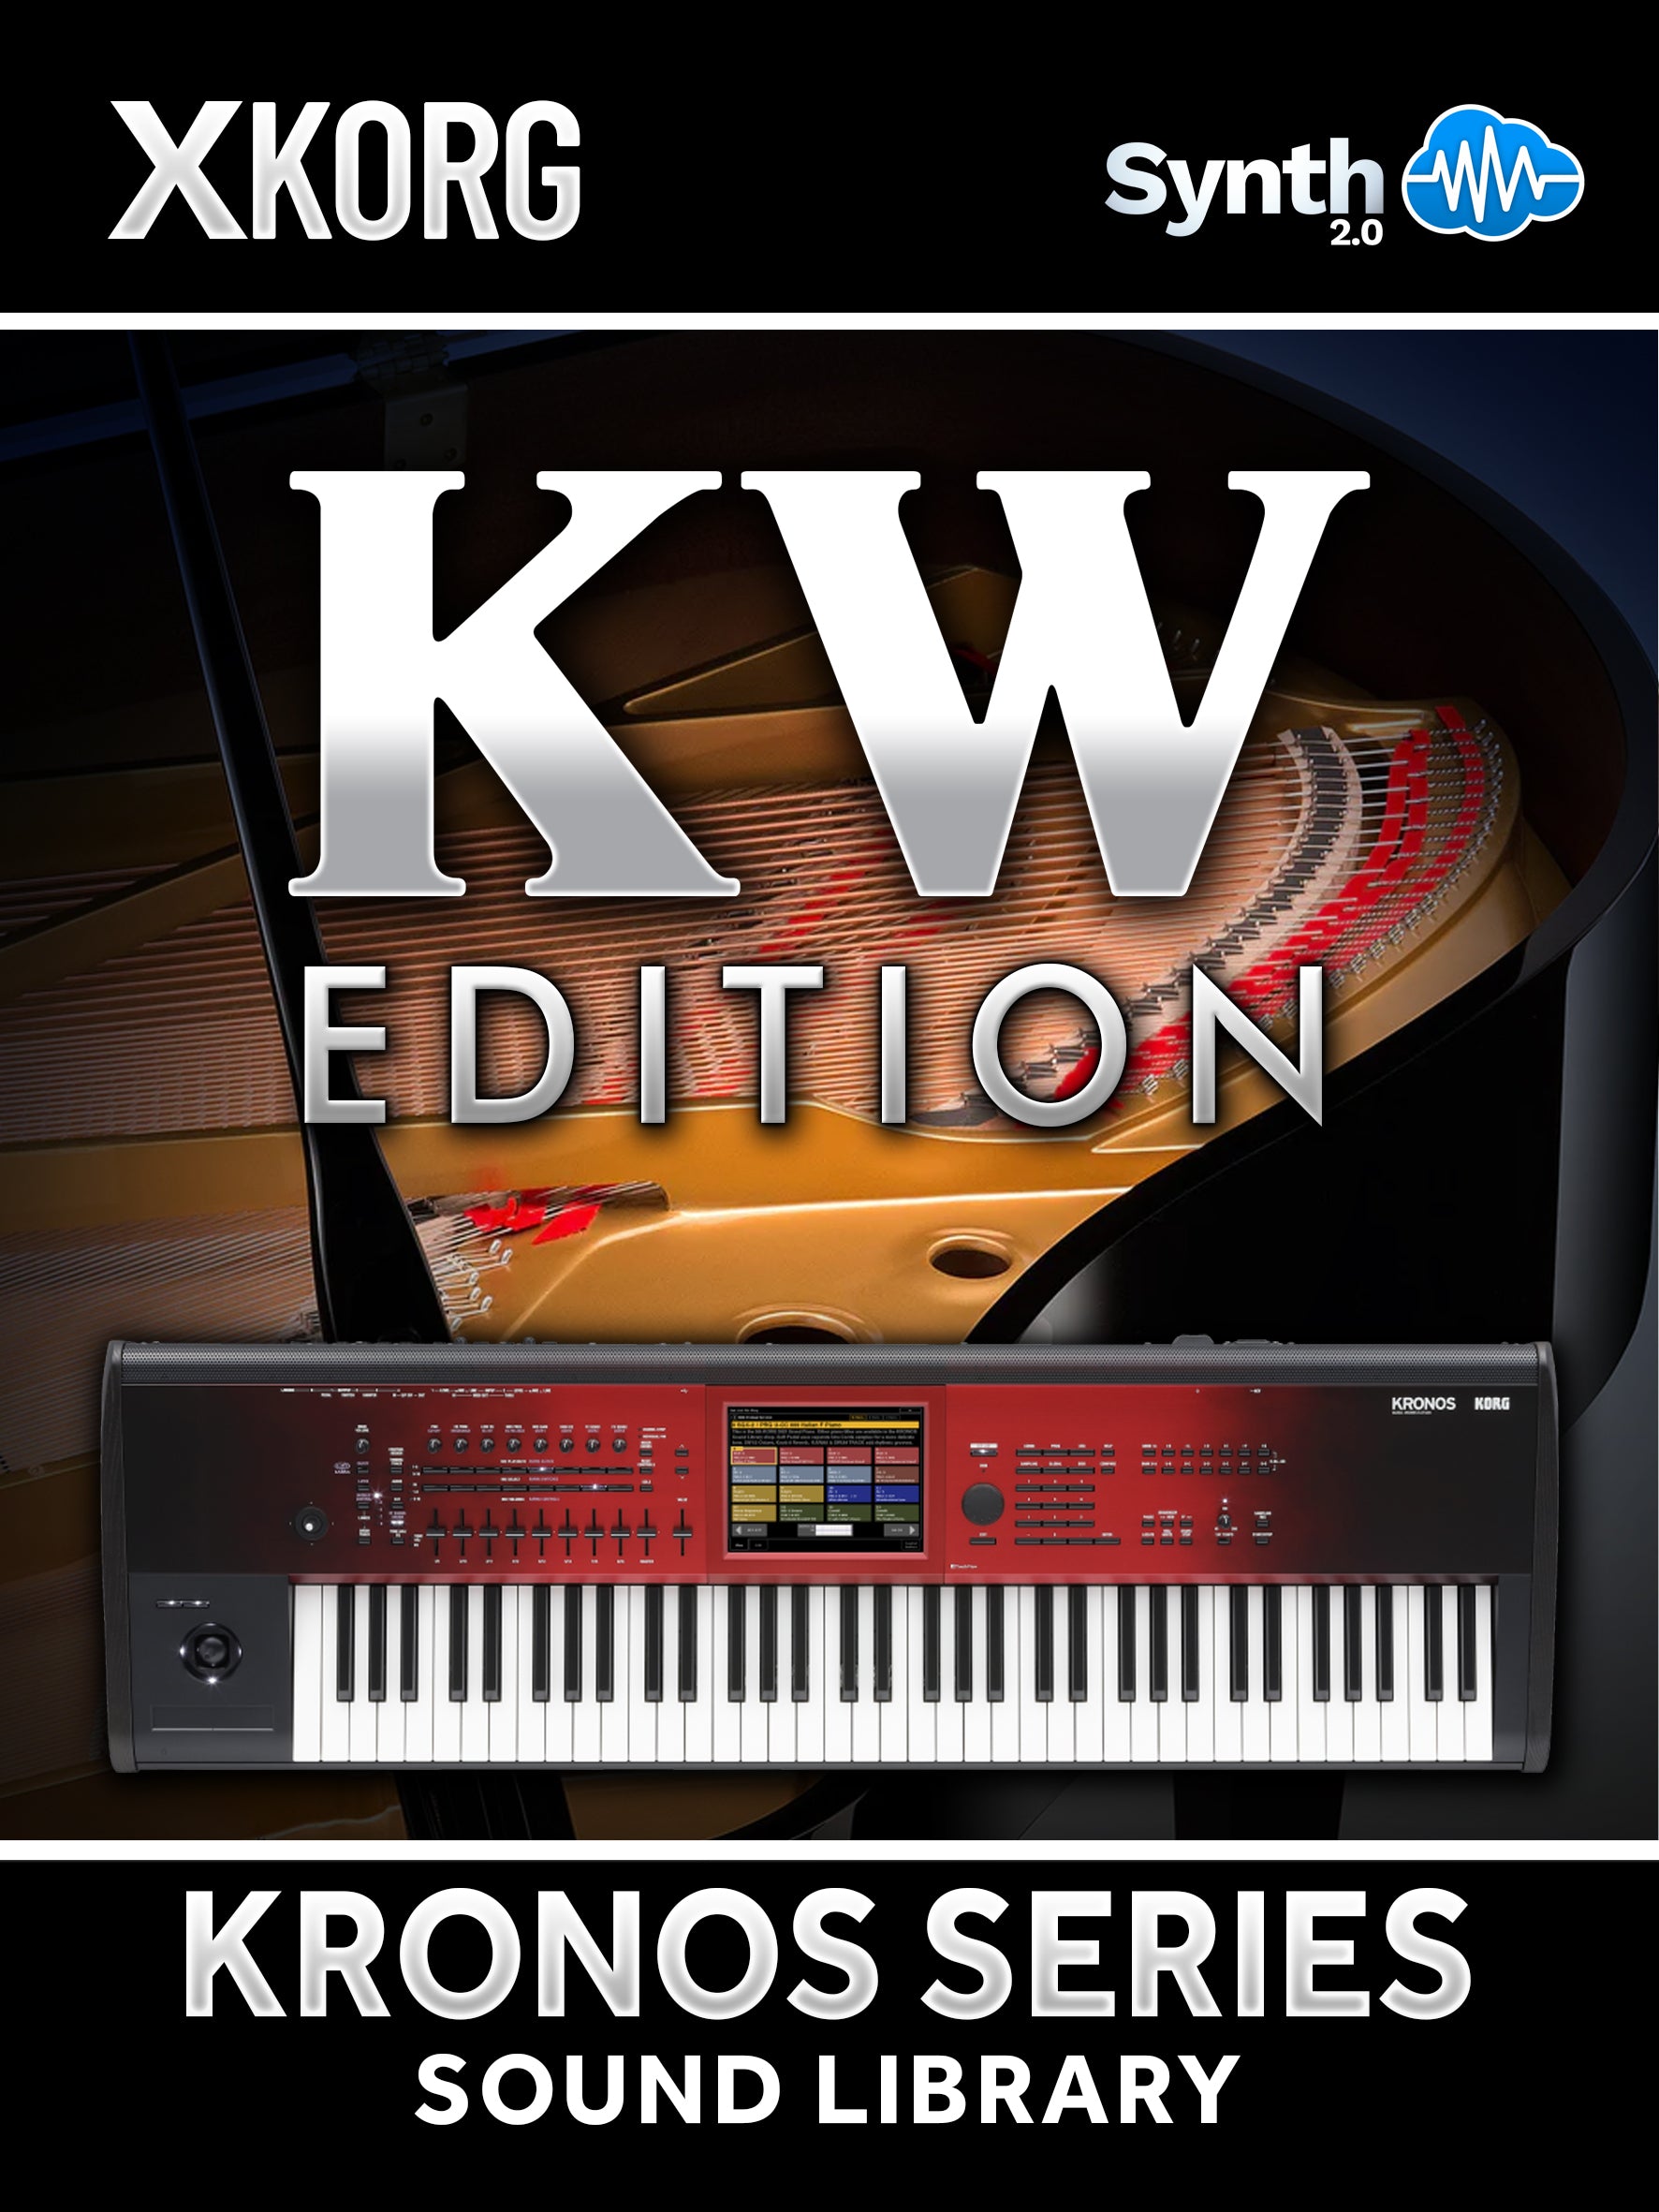 DRS009 - Contemporary Pianos KW Edition - Korg Kronos ( 4 presets )